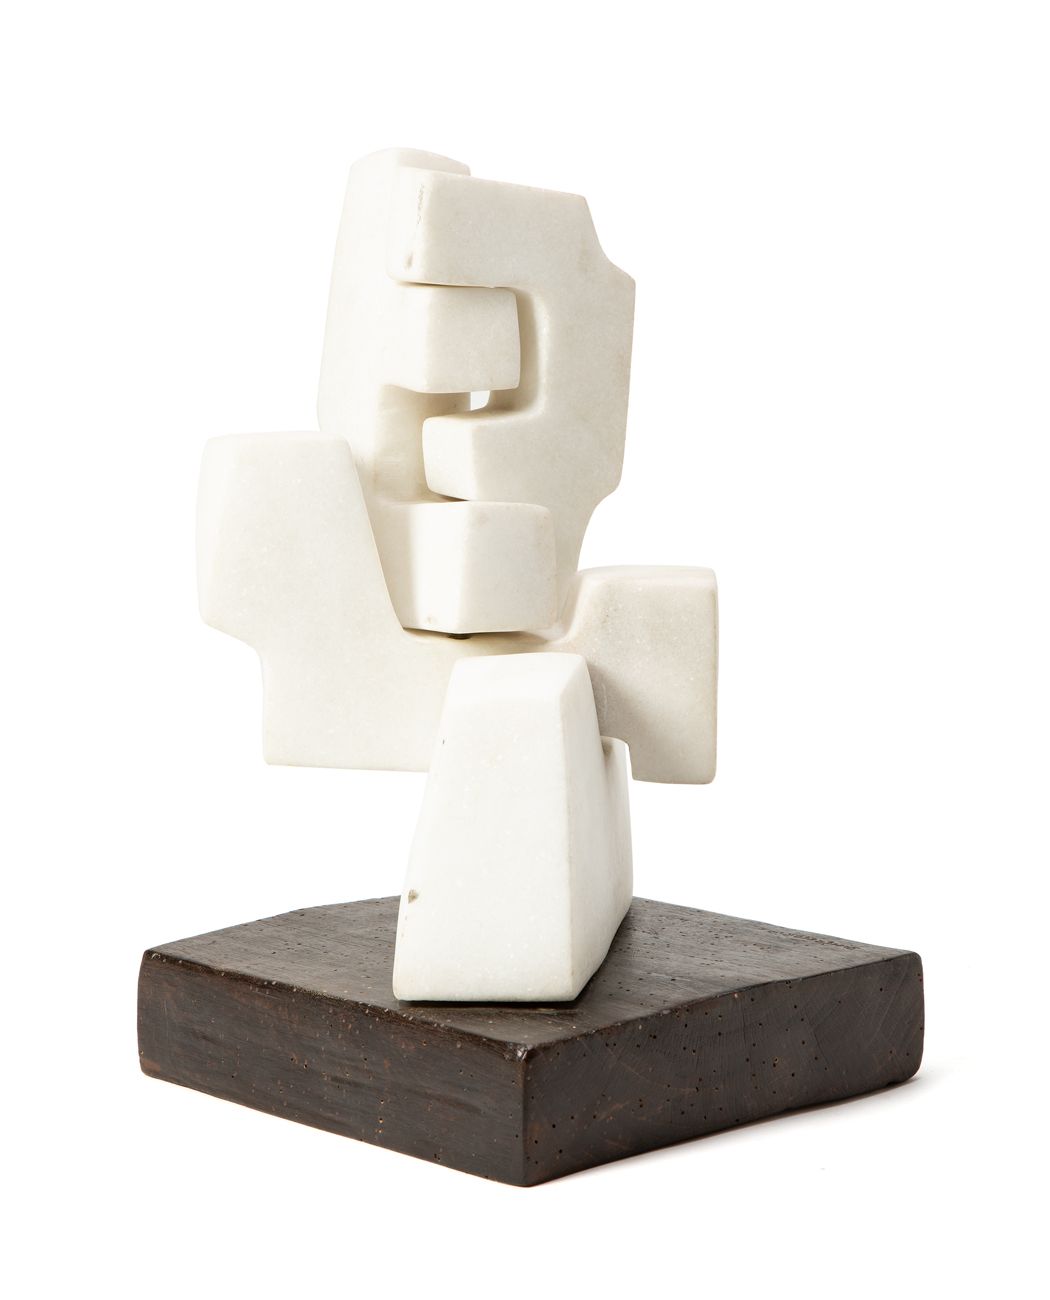 GIANCARLO SANGREGORIO (1925-2013) - Modulare, 1992 大理石和木头雕塑

cm 48x31x28

刻在木头上的&hellip;